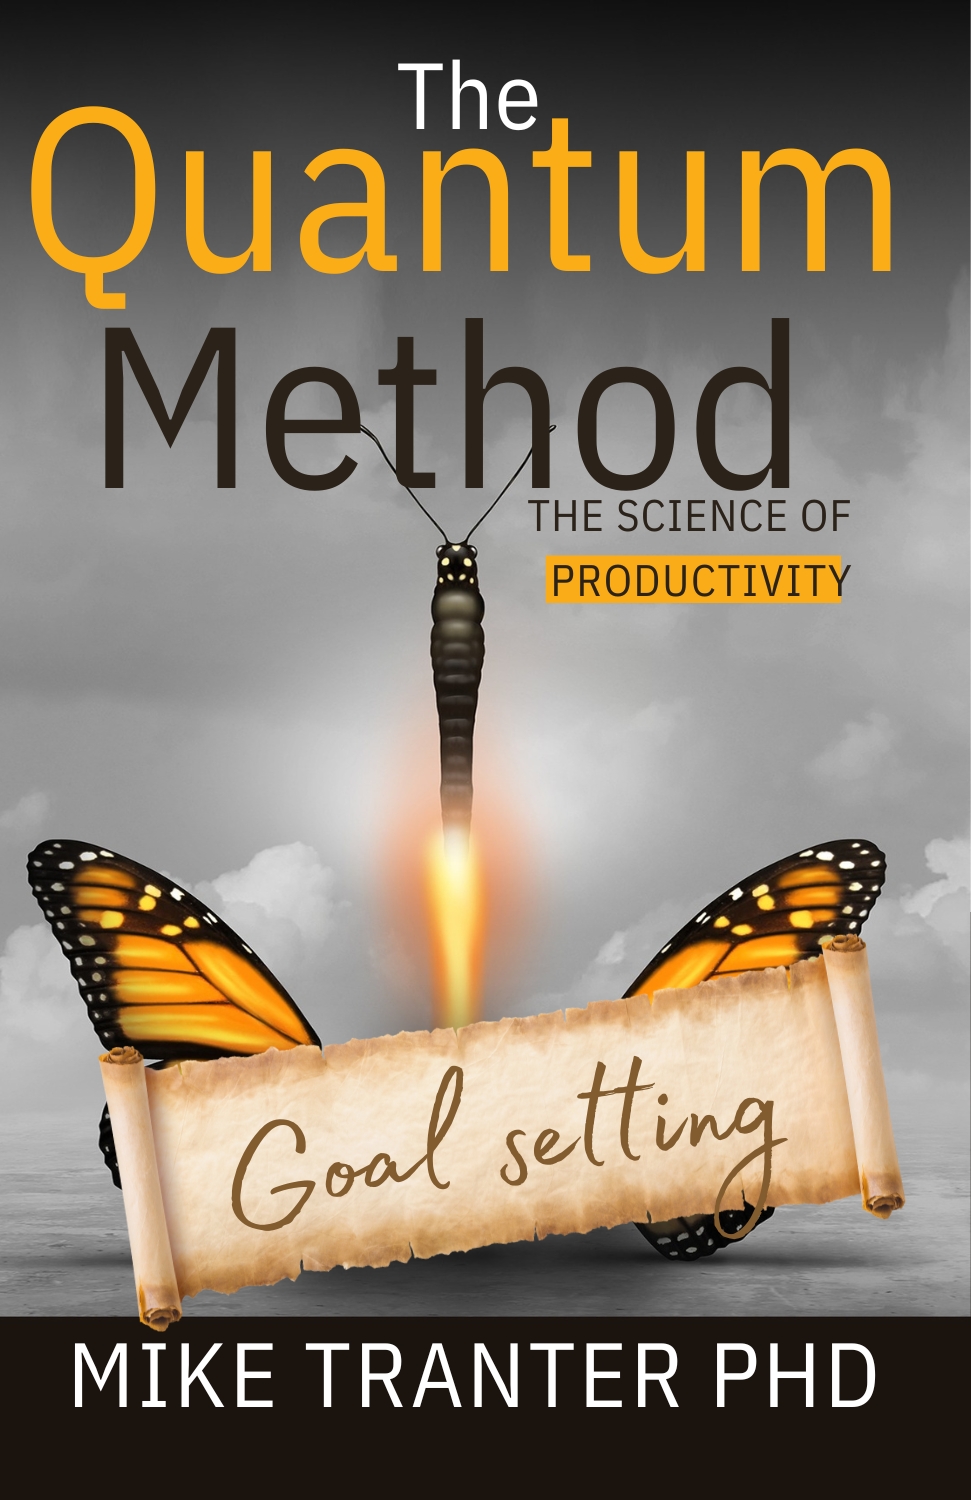 Improve motivation, goal setting, productivity, performance, goal setting, neuroscience